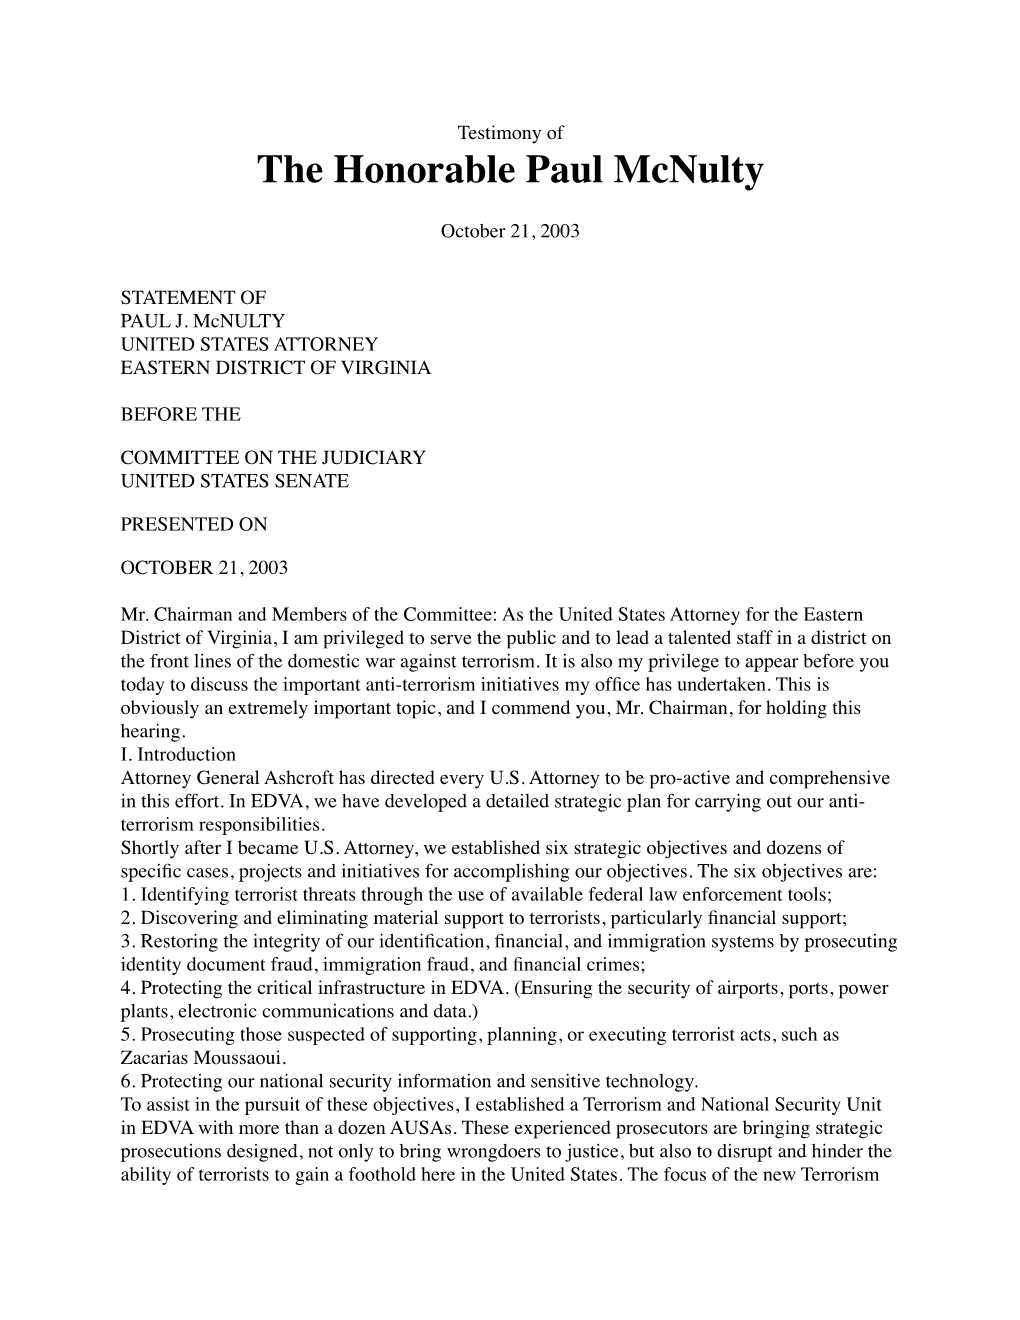 The Honorable Paul Mcnulty